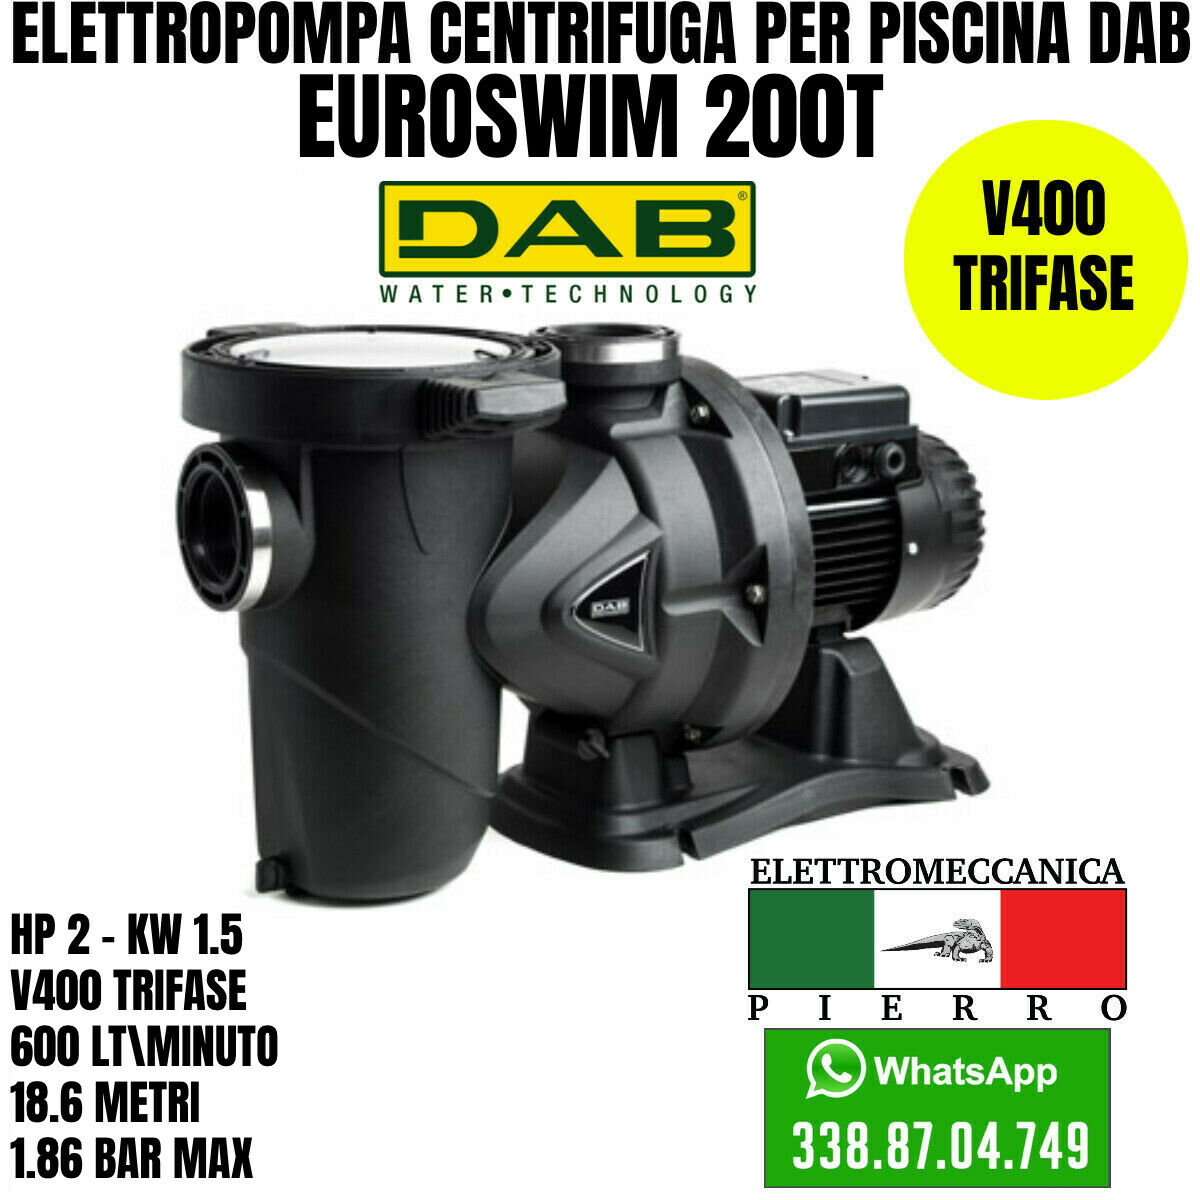 Pompa per piscina DAB EuroSwim EuroPro Elettropompa centrifuga piscine HP 0/3 Logo Elettromeccanica Pierro Elettromeccanica Express Assistenza EuroSwim 200T Hp 2 - KW 1.5 600LT/Minuto 18,6 Metri 1,86 BAR MAX V400 (2694574)